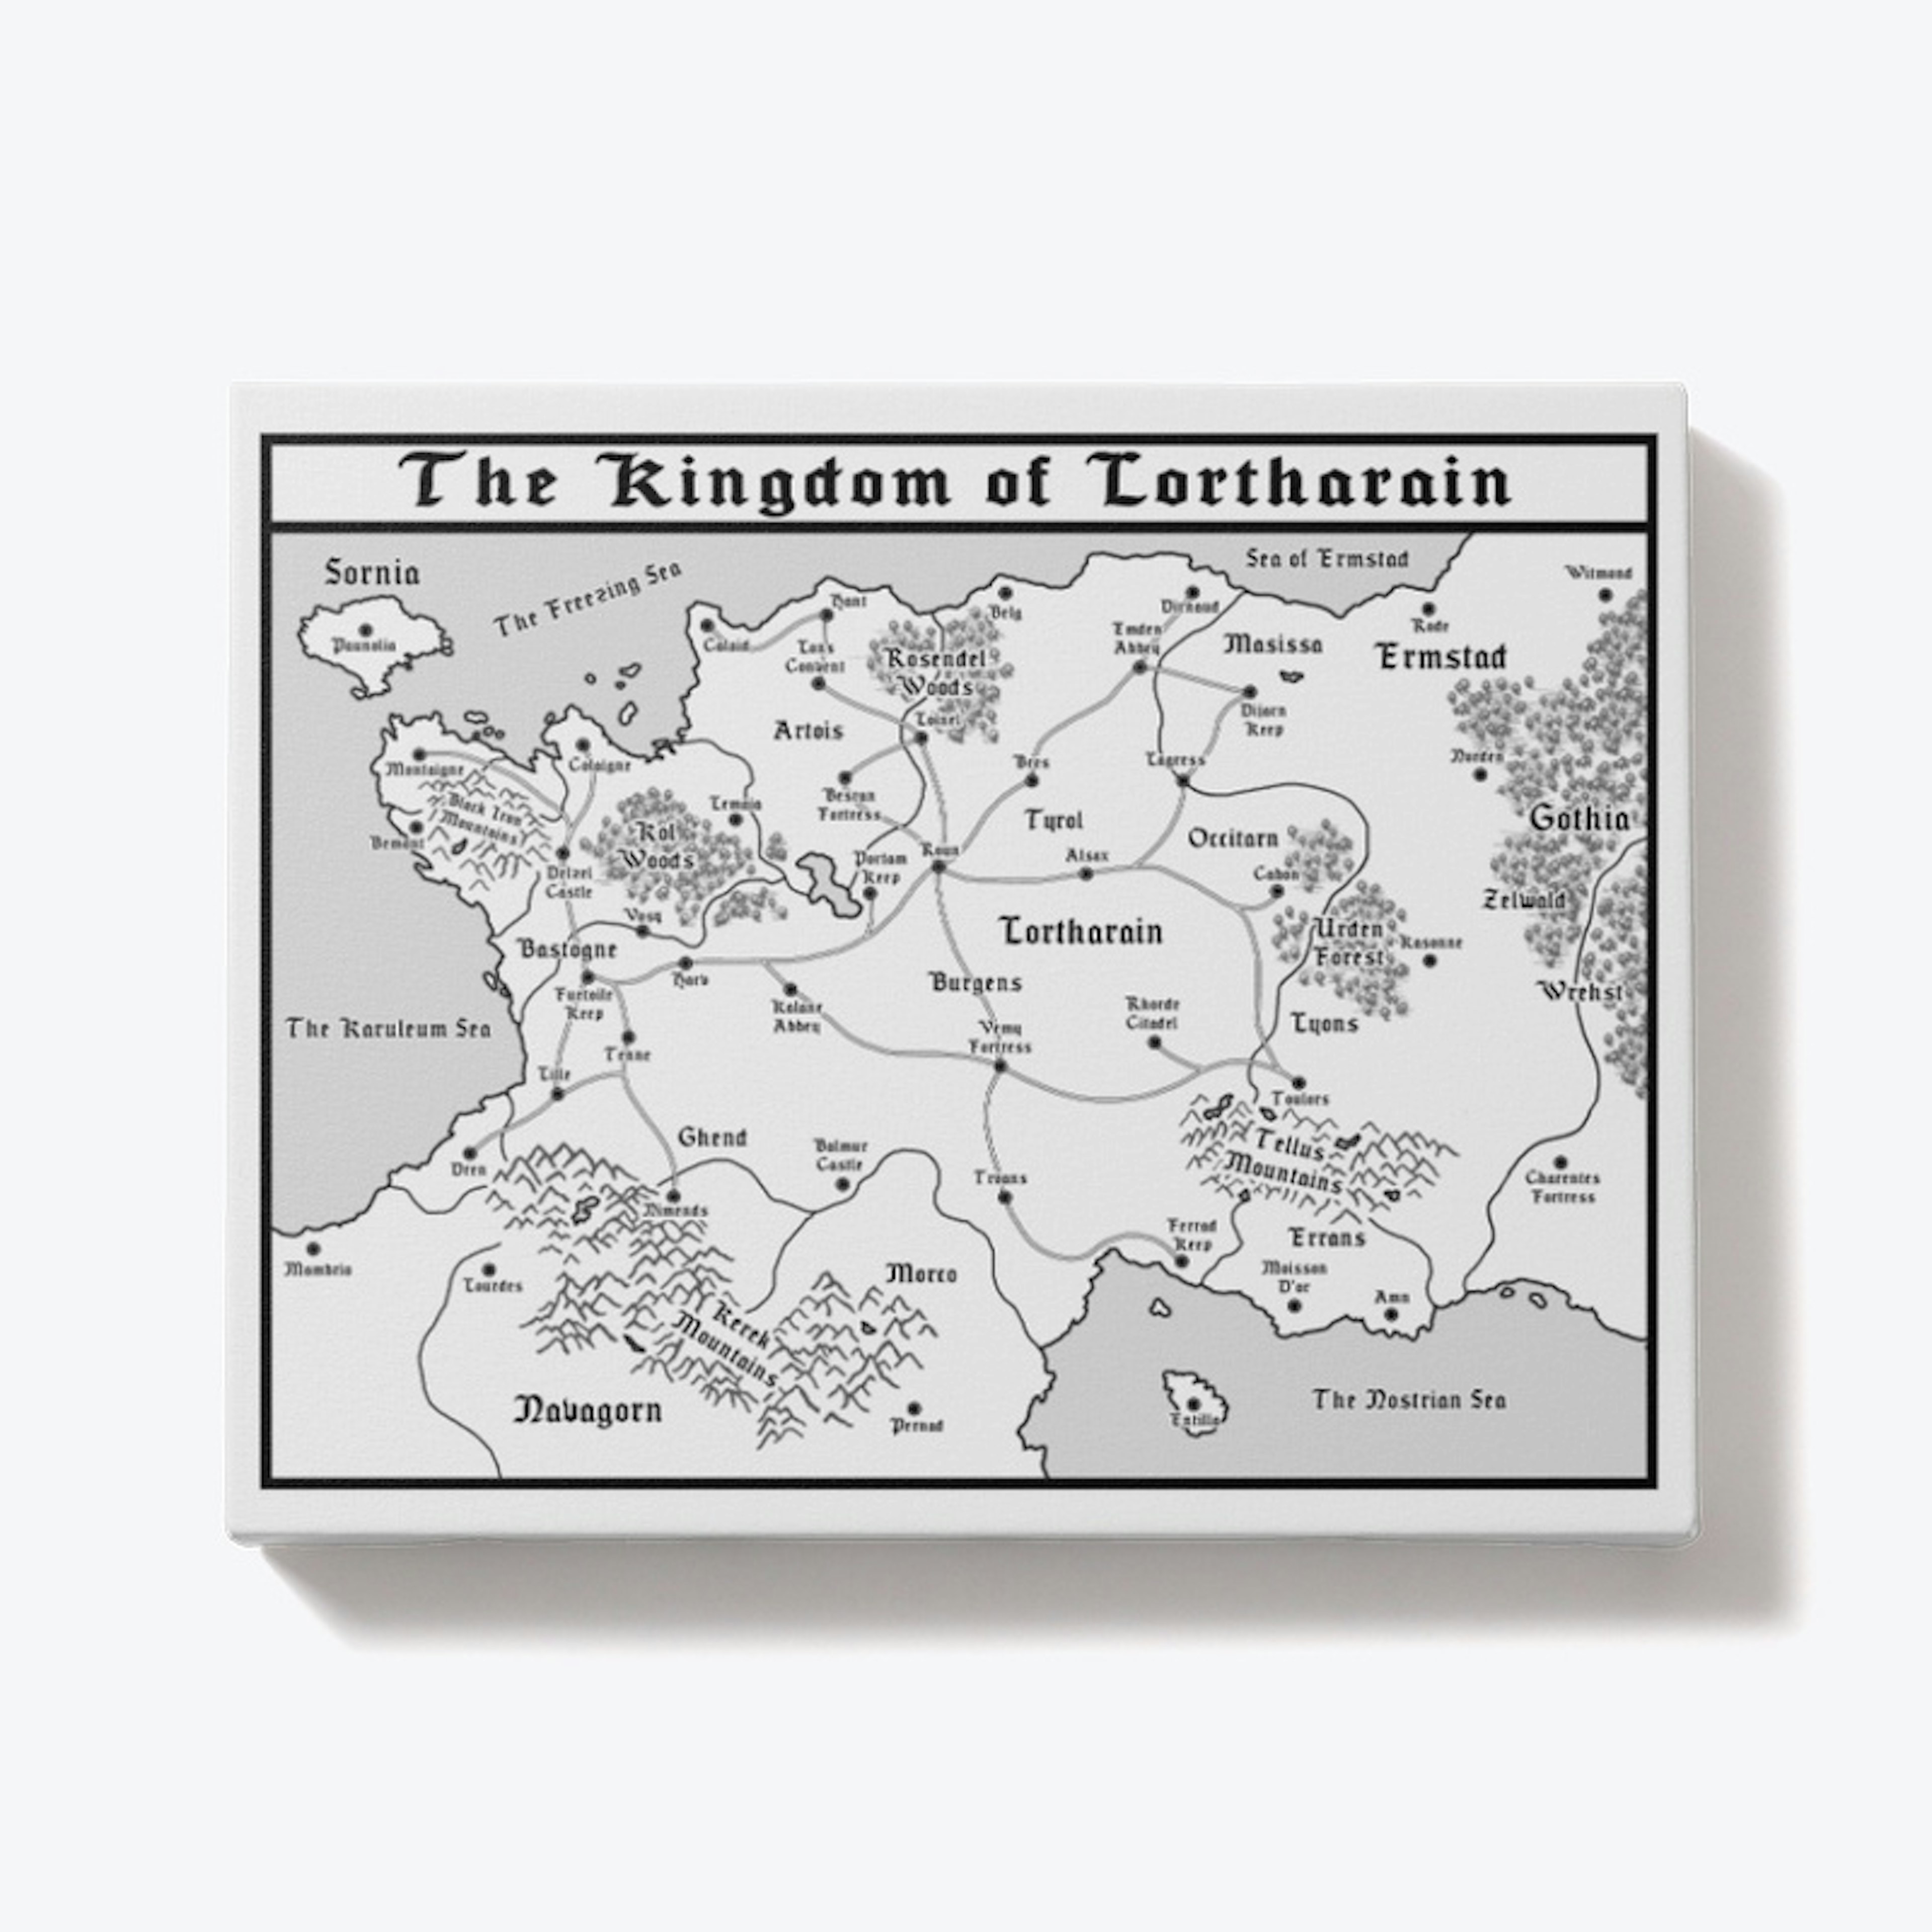 The Kingdom of Lortharain Map